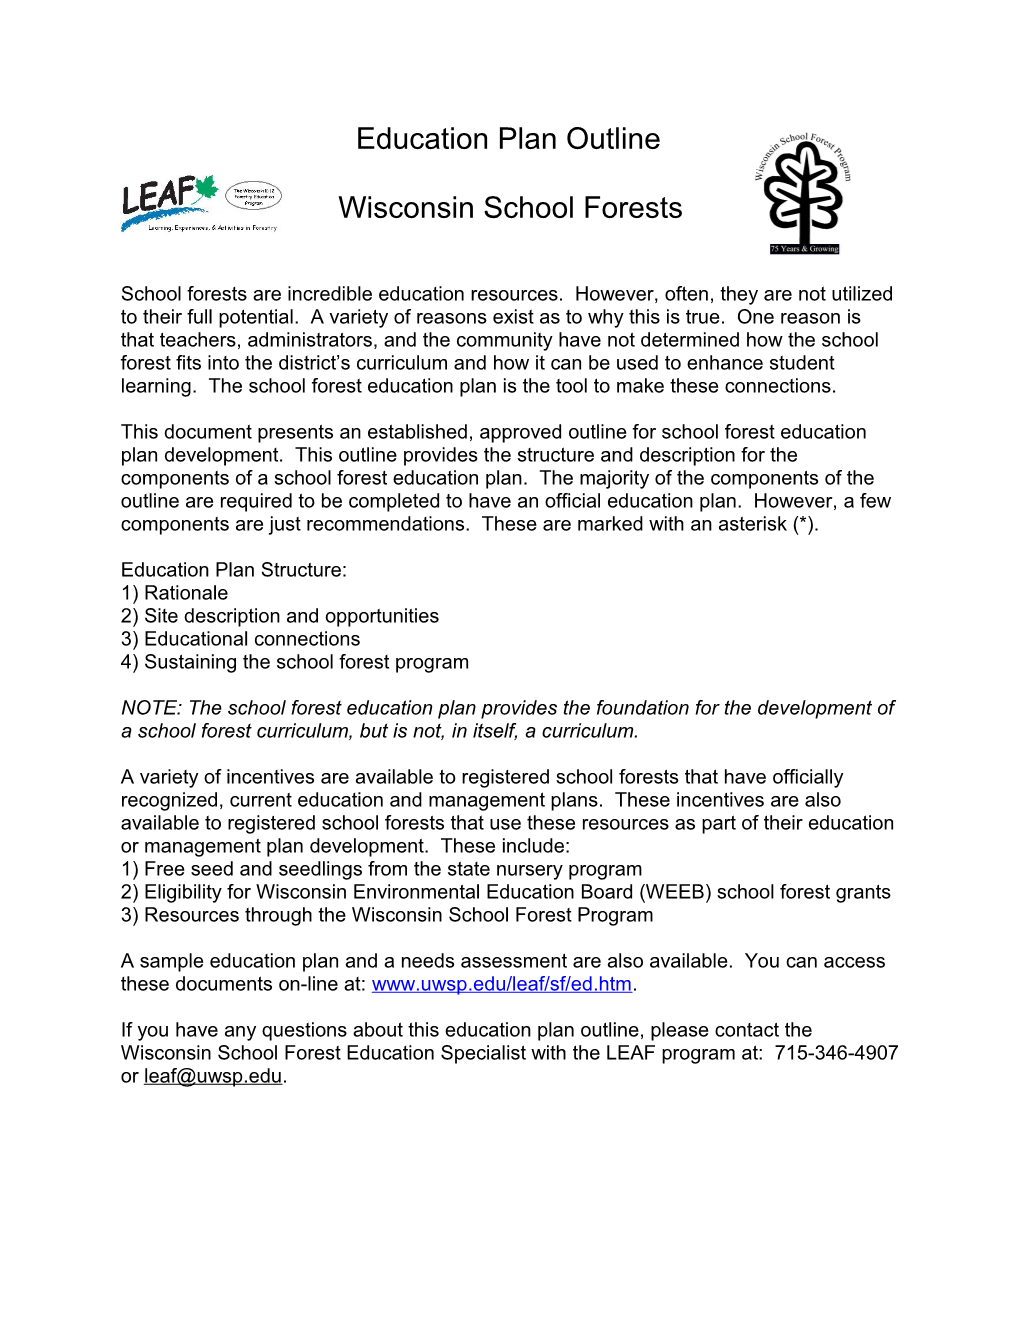 Wisconsin School Forest